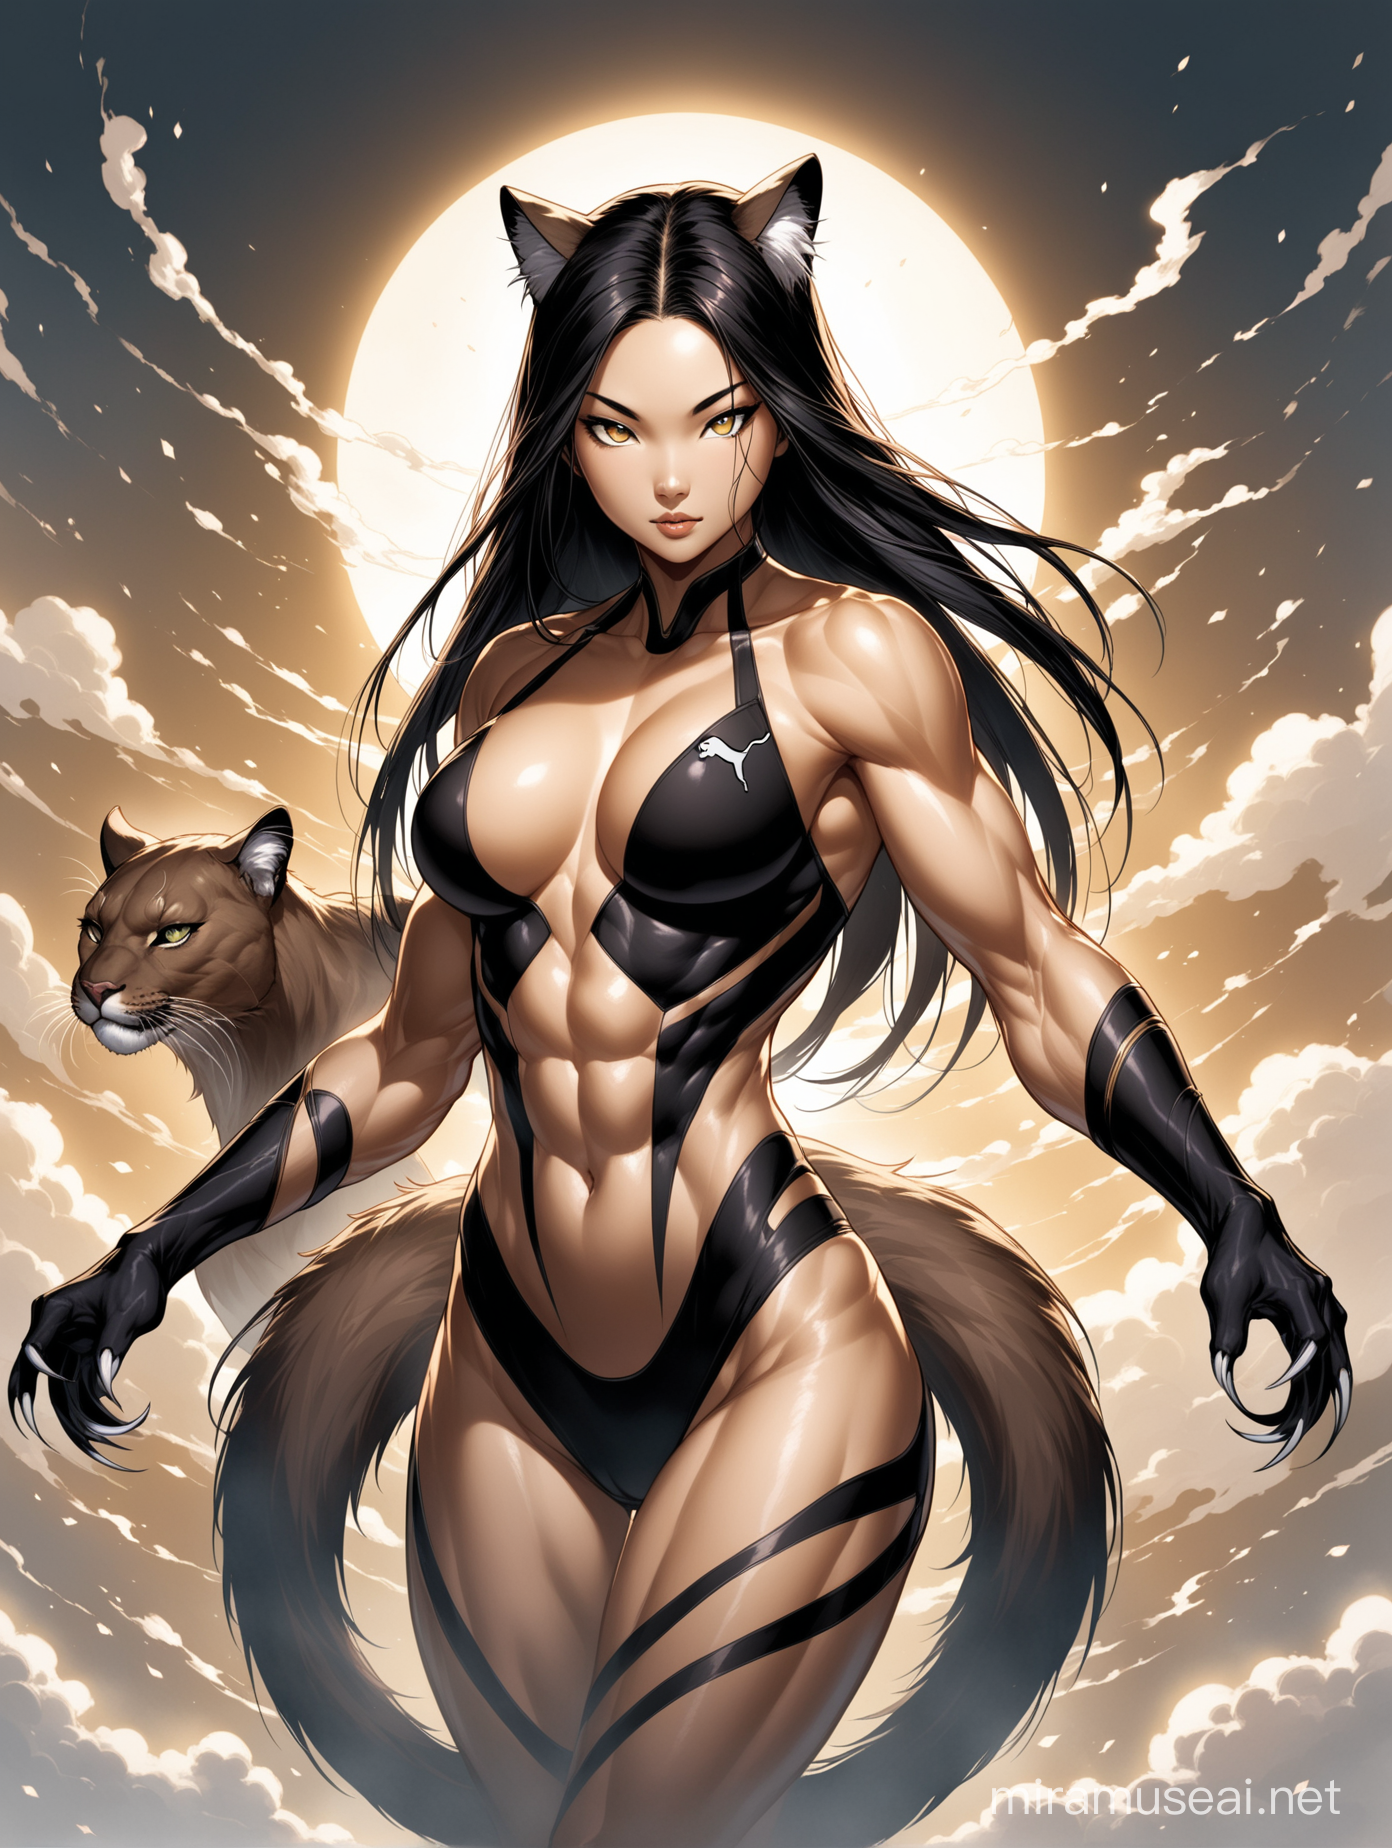 Asian WomanPuma Mutant Dynamic Fusion of Human and Animal Traits